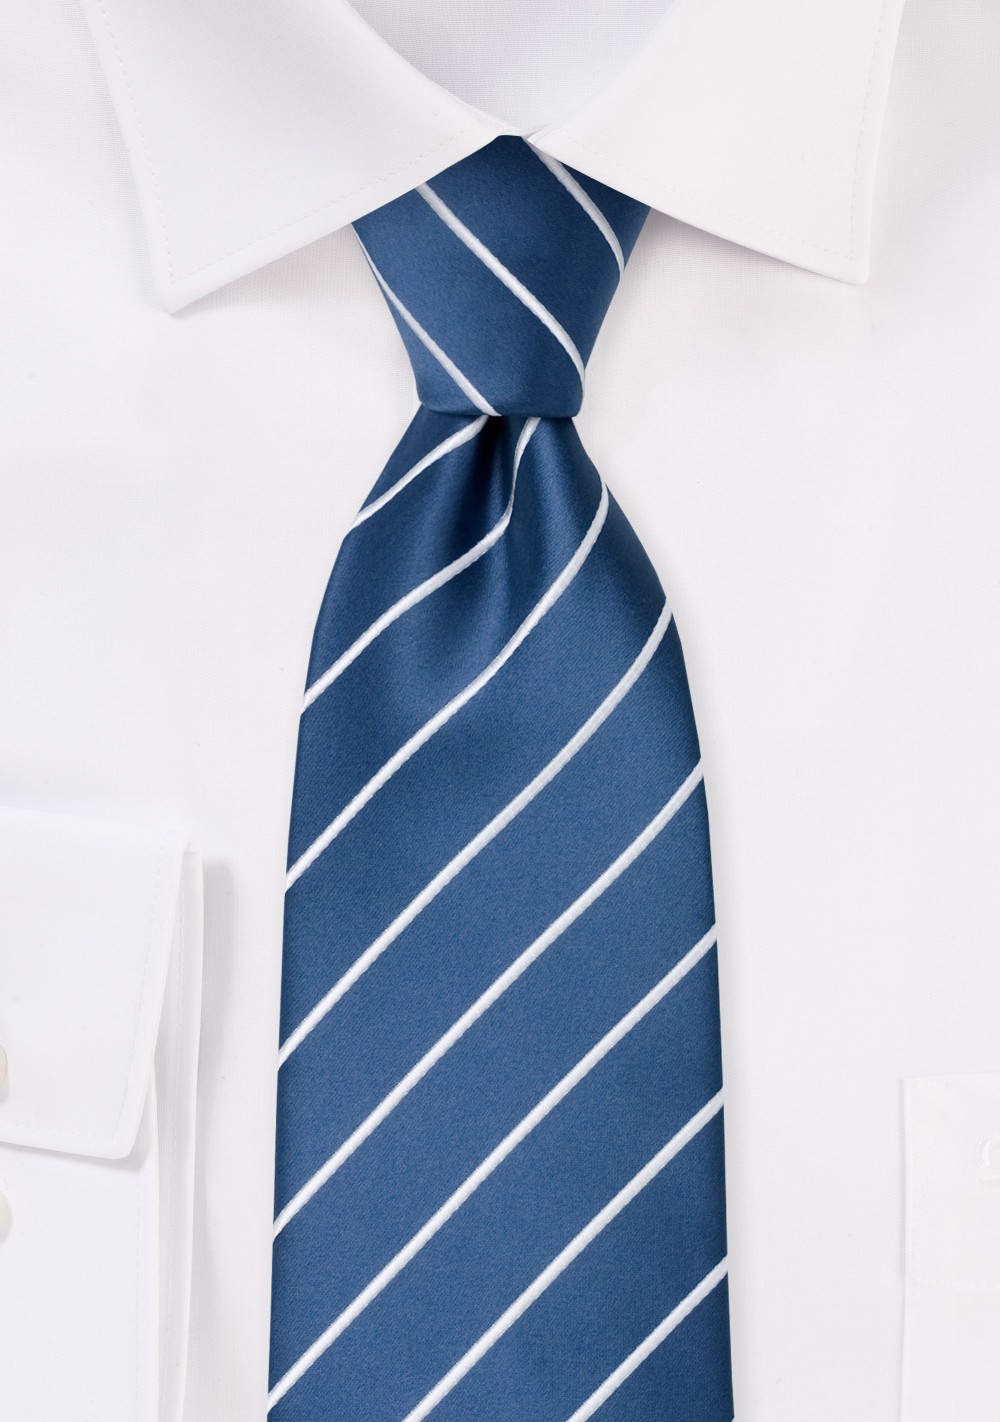 Modern striped ties - Royal blue necktie with fine white stripes